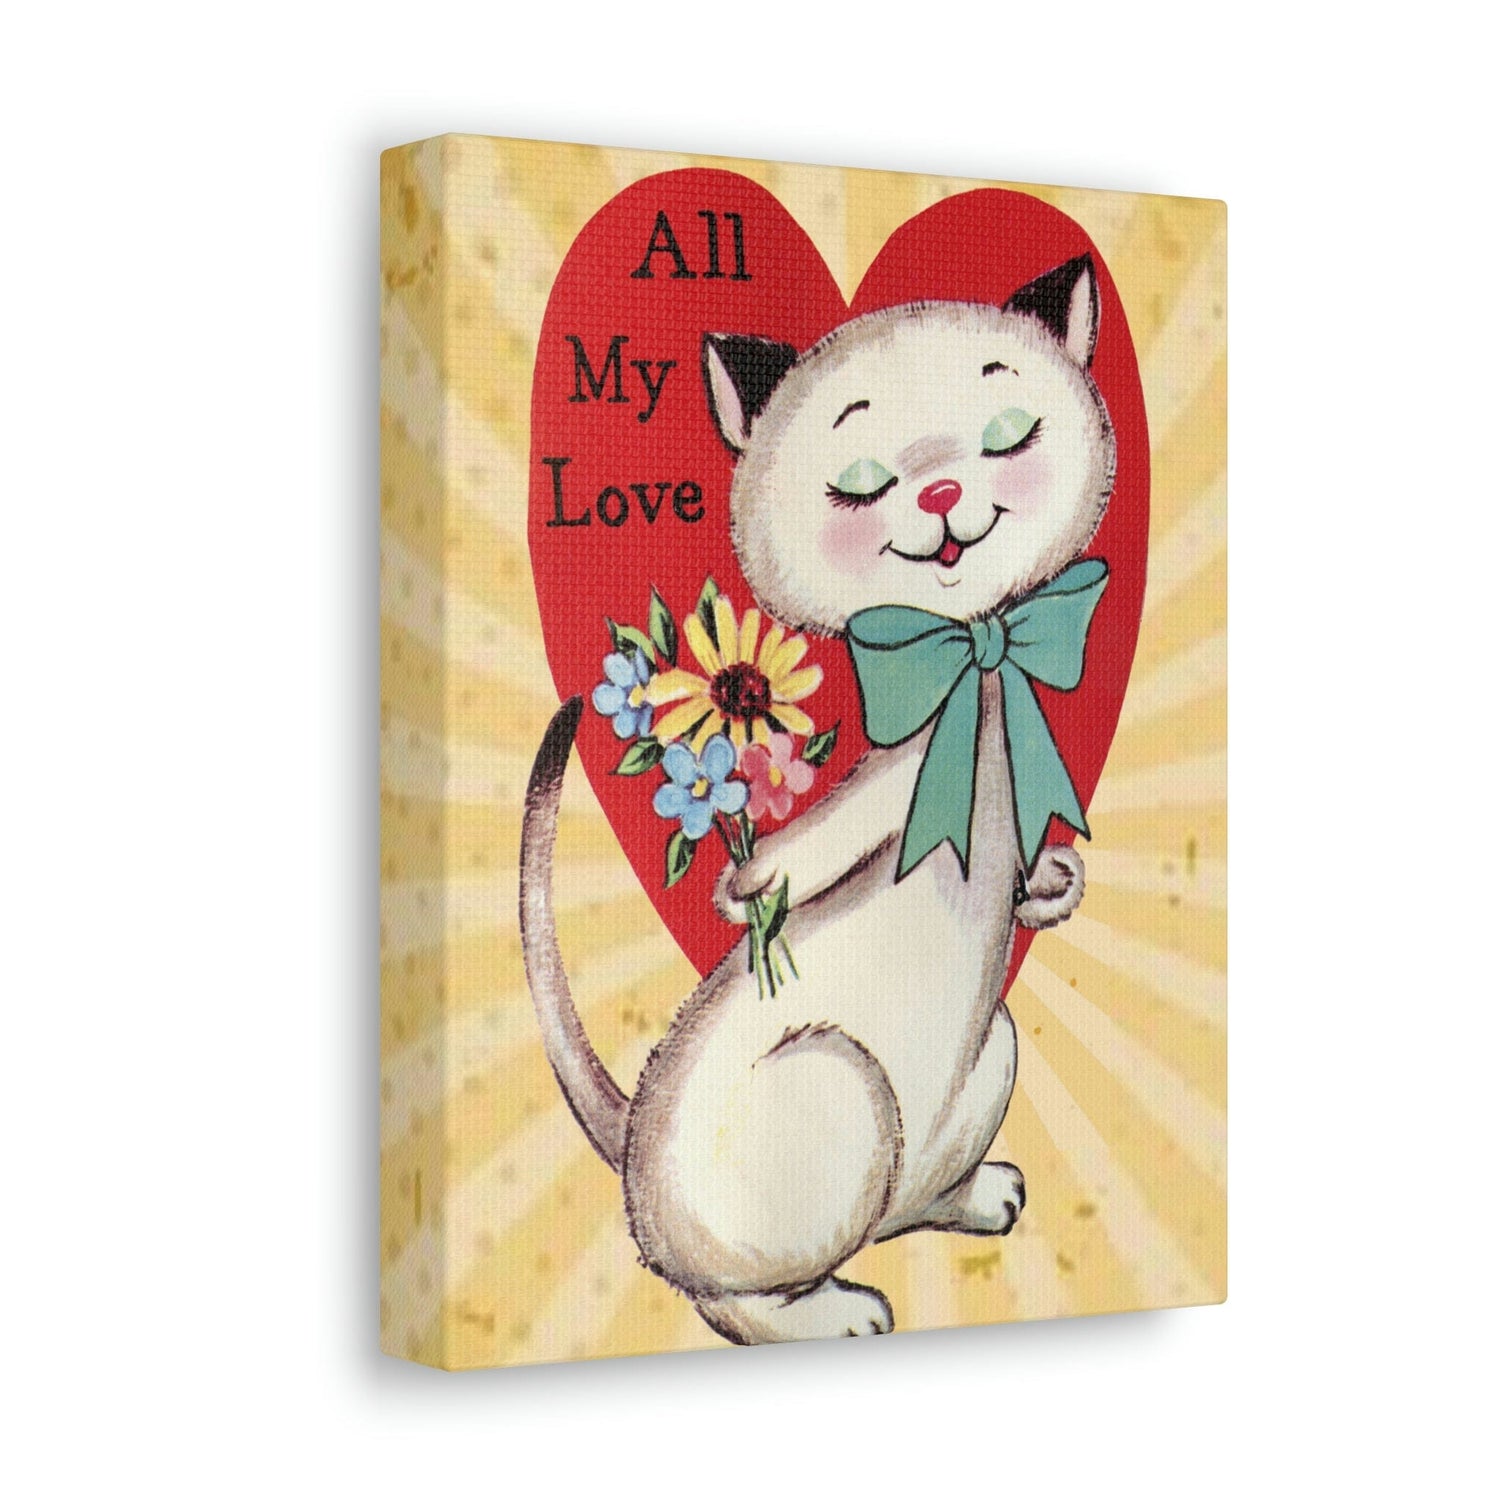 Vintage-Style Valentine's Day Card